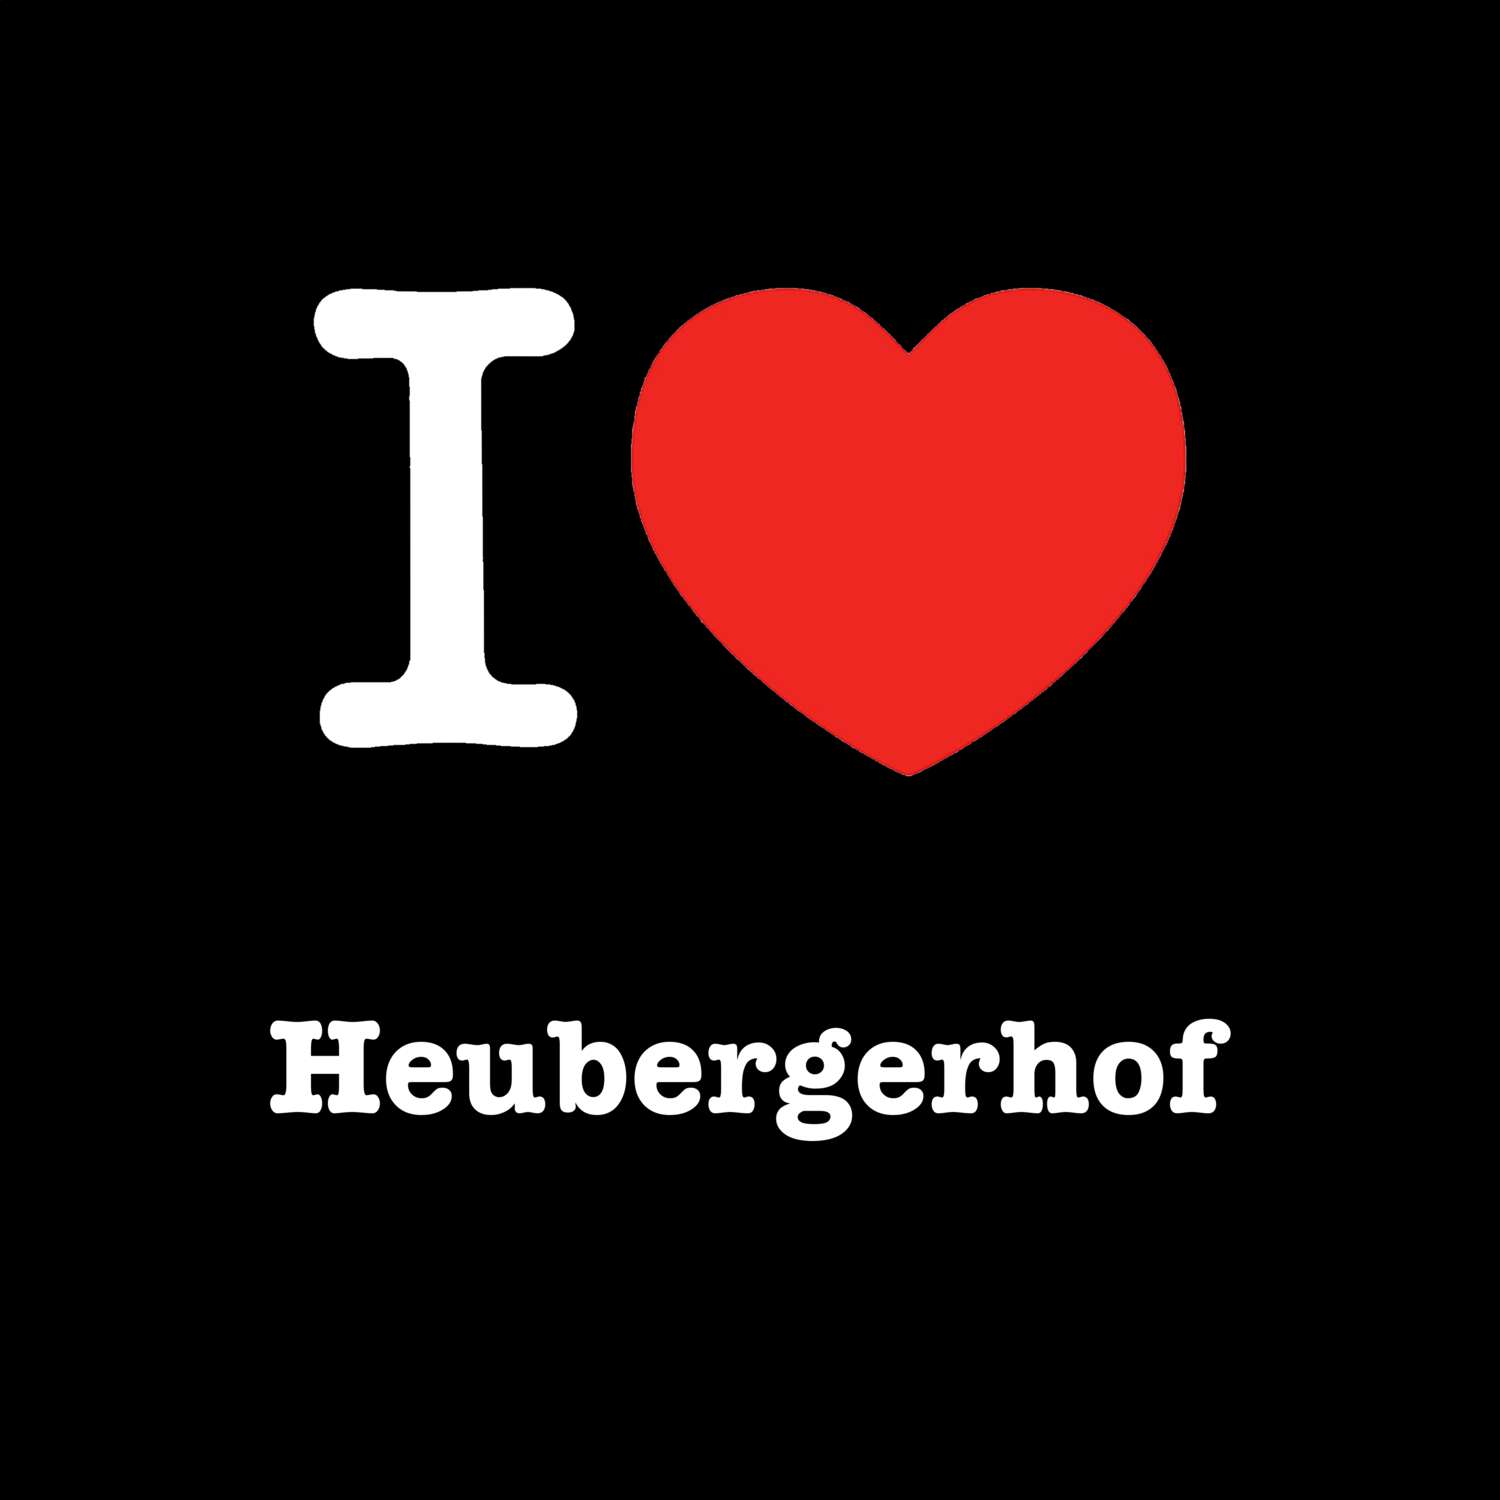 Heubergerhof T-Shirt »I love«